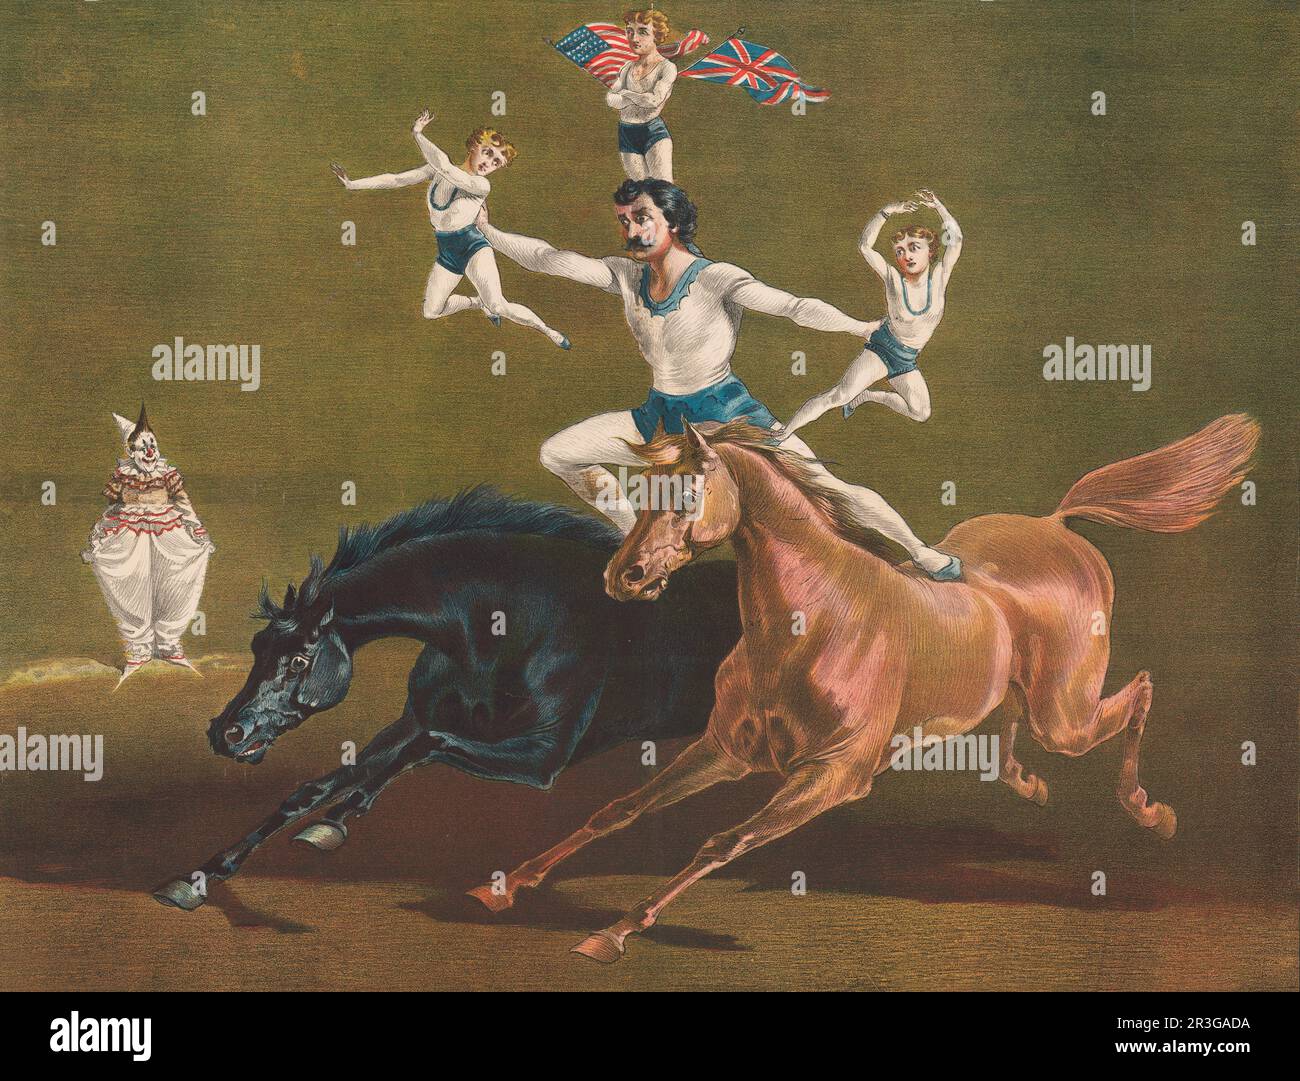 Acrobats on horseback. Stock Photo